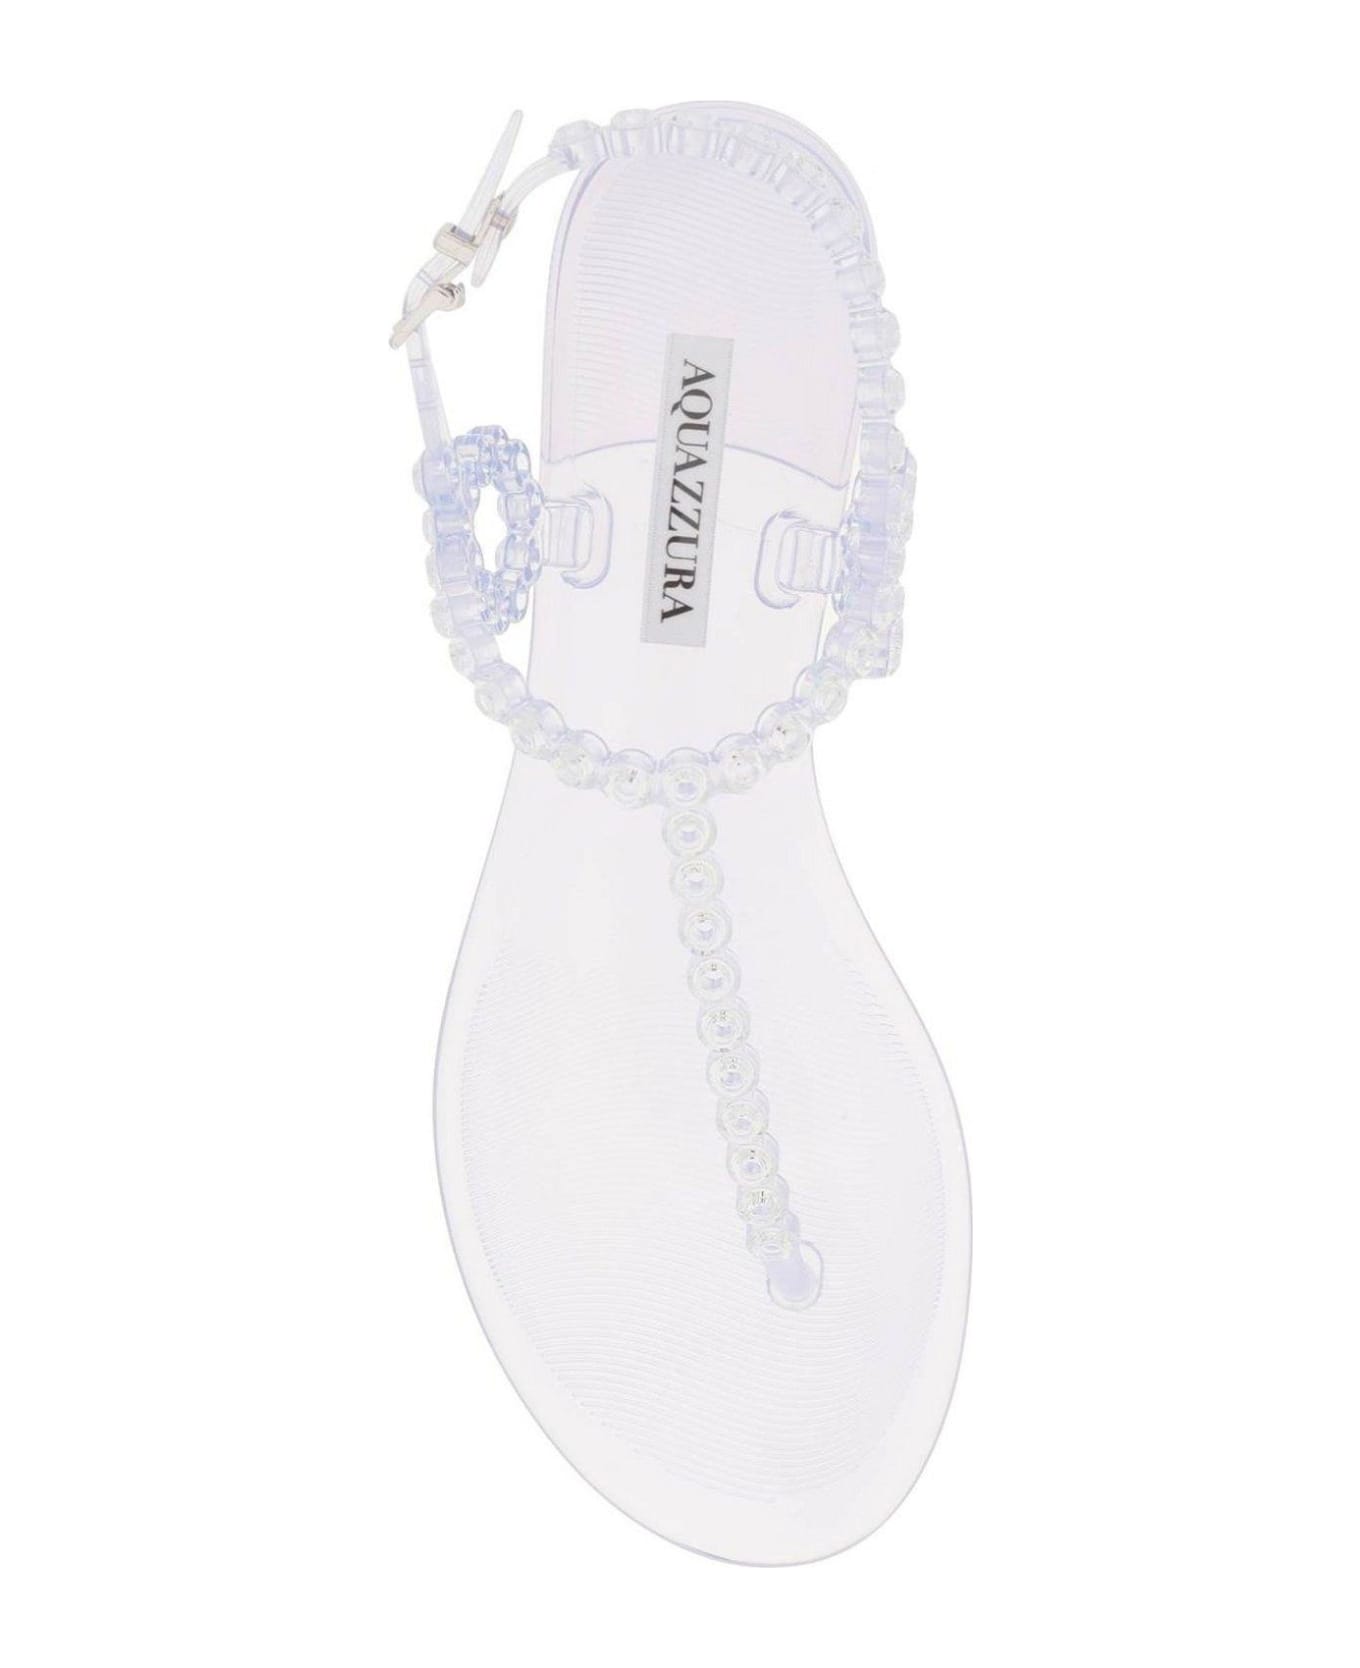 Aquazzura Almost Bare Embellished Jelly Flat Sandals - Argento